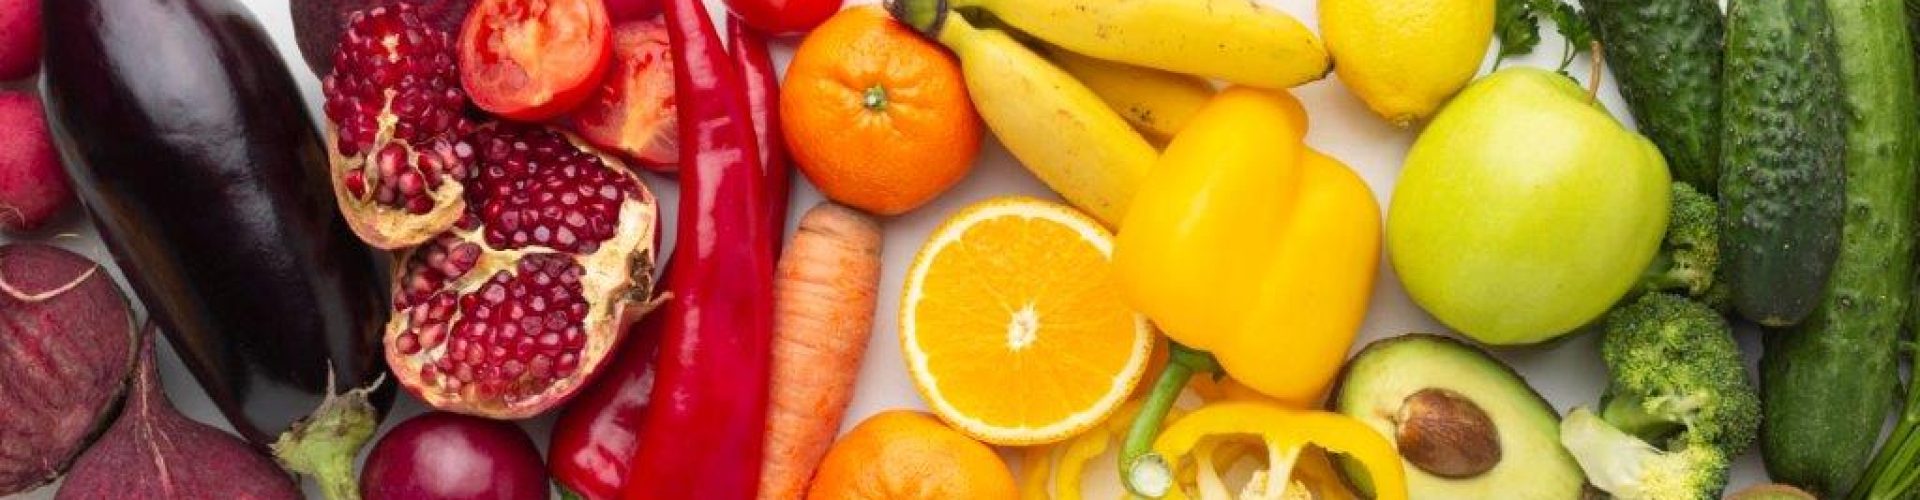 view-vegetables-fruits-arrangement